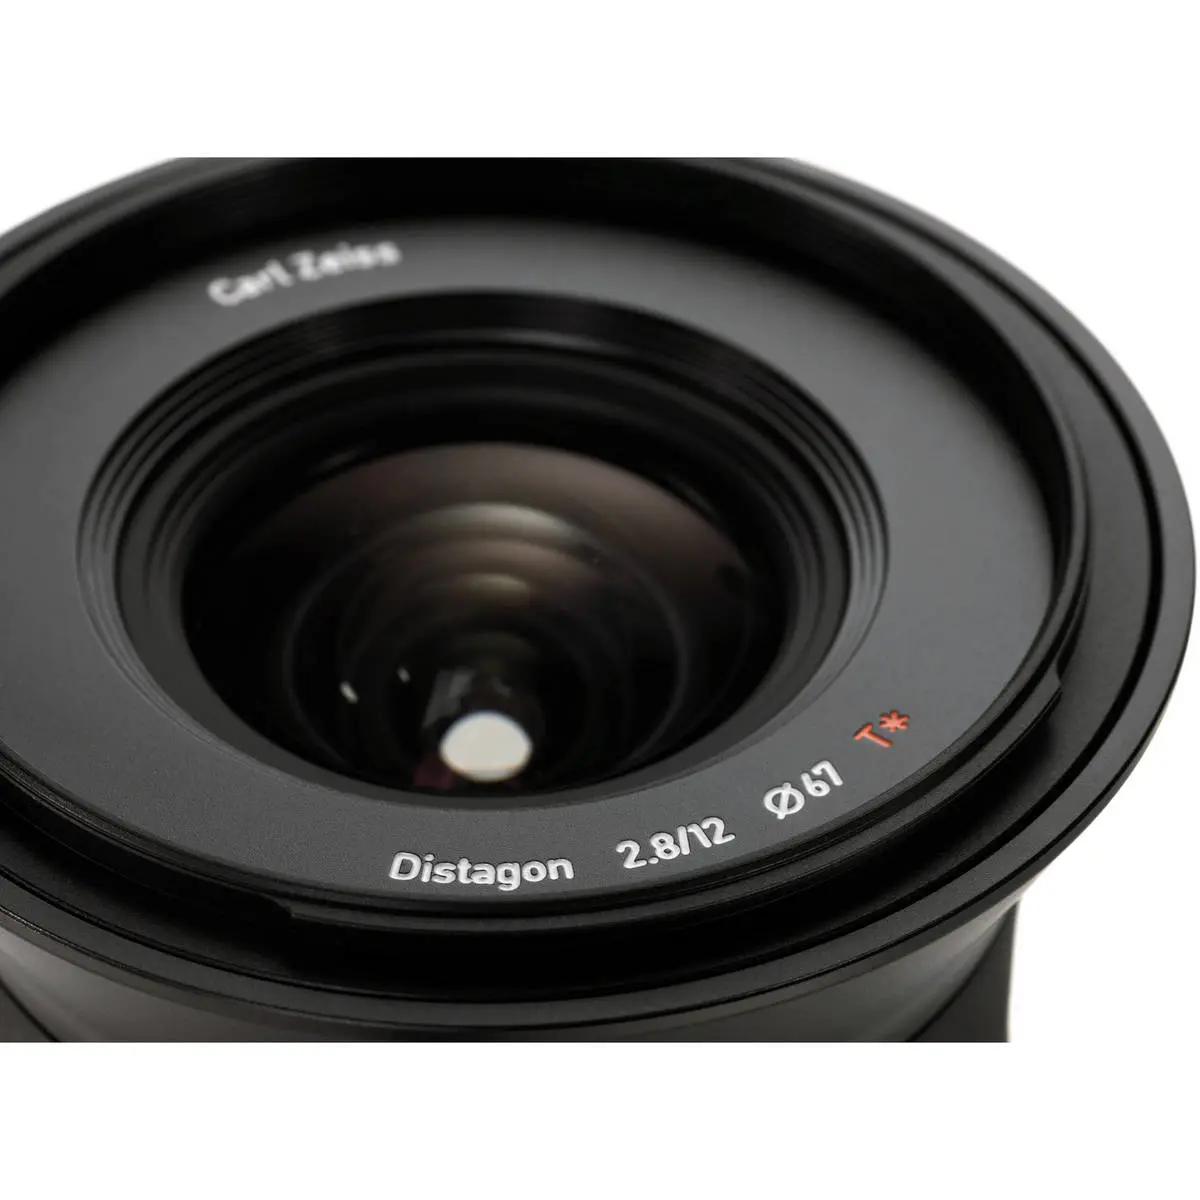 1. Carl Zeiss Touit 2.8/12 Distagon T* (Fuji X) Lens